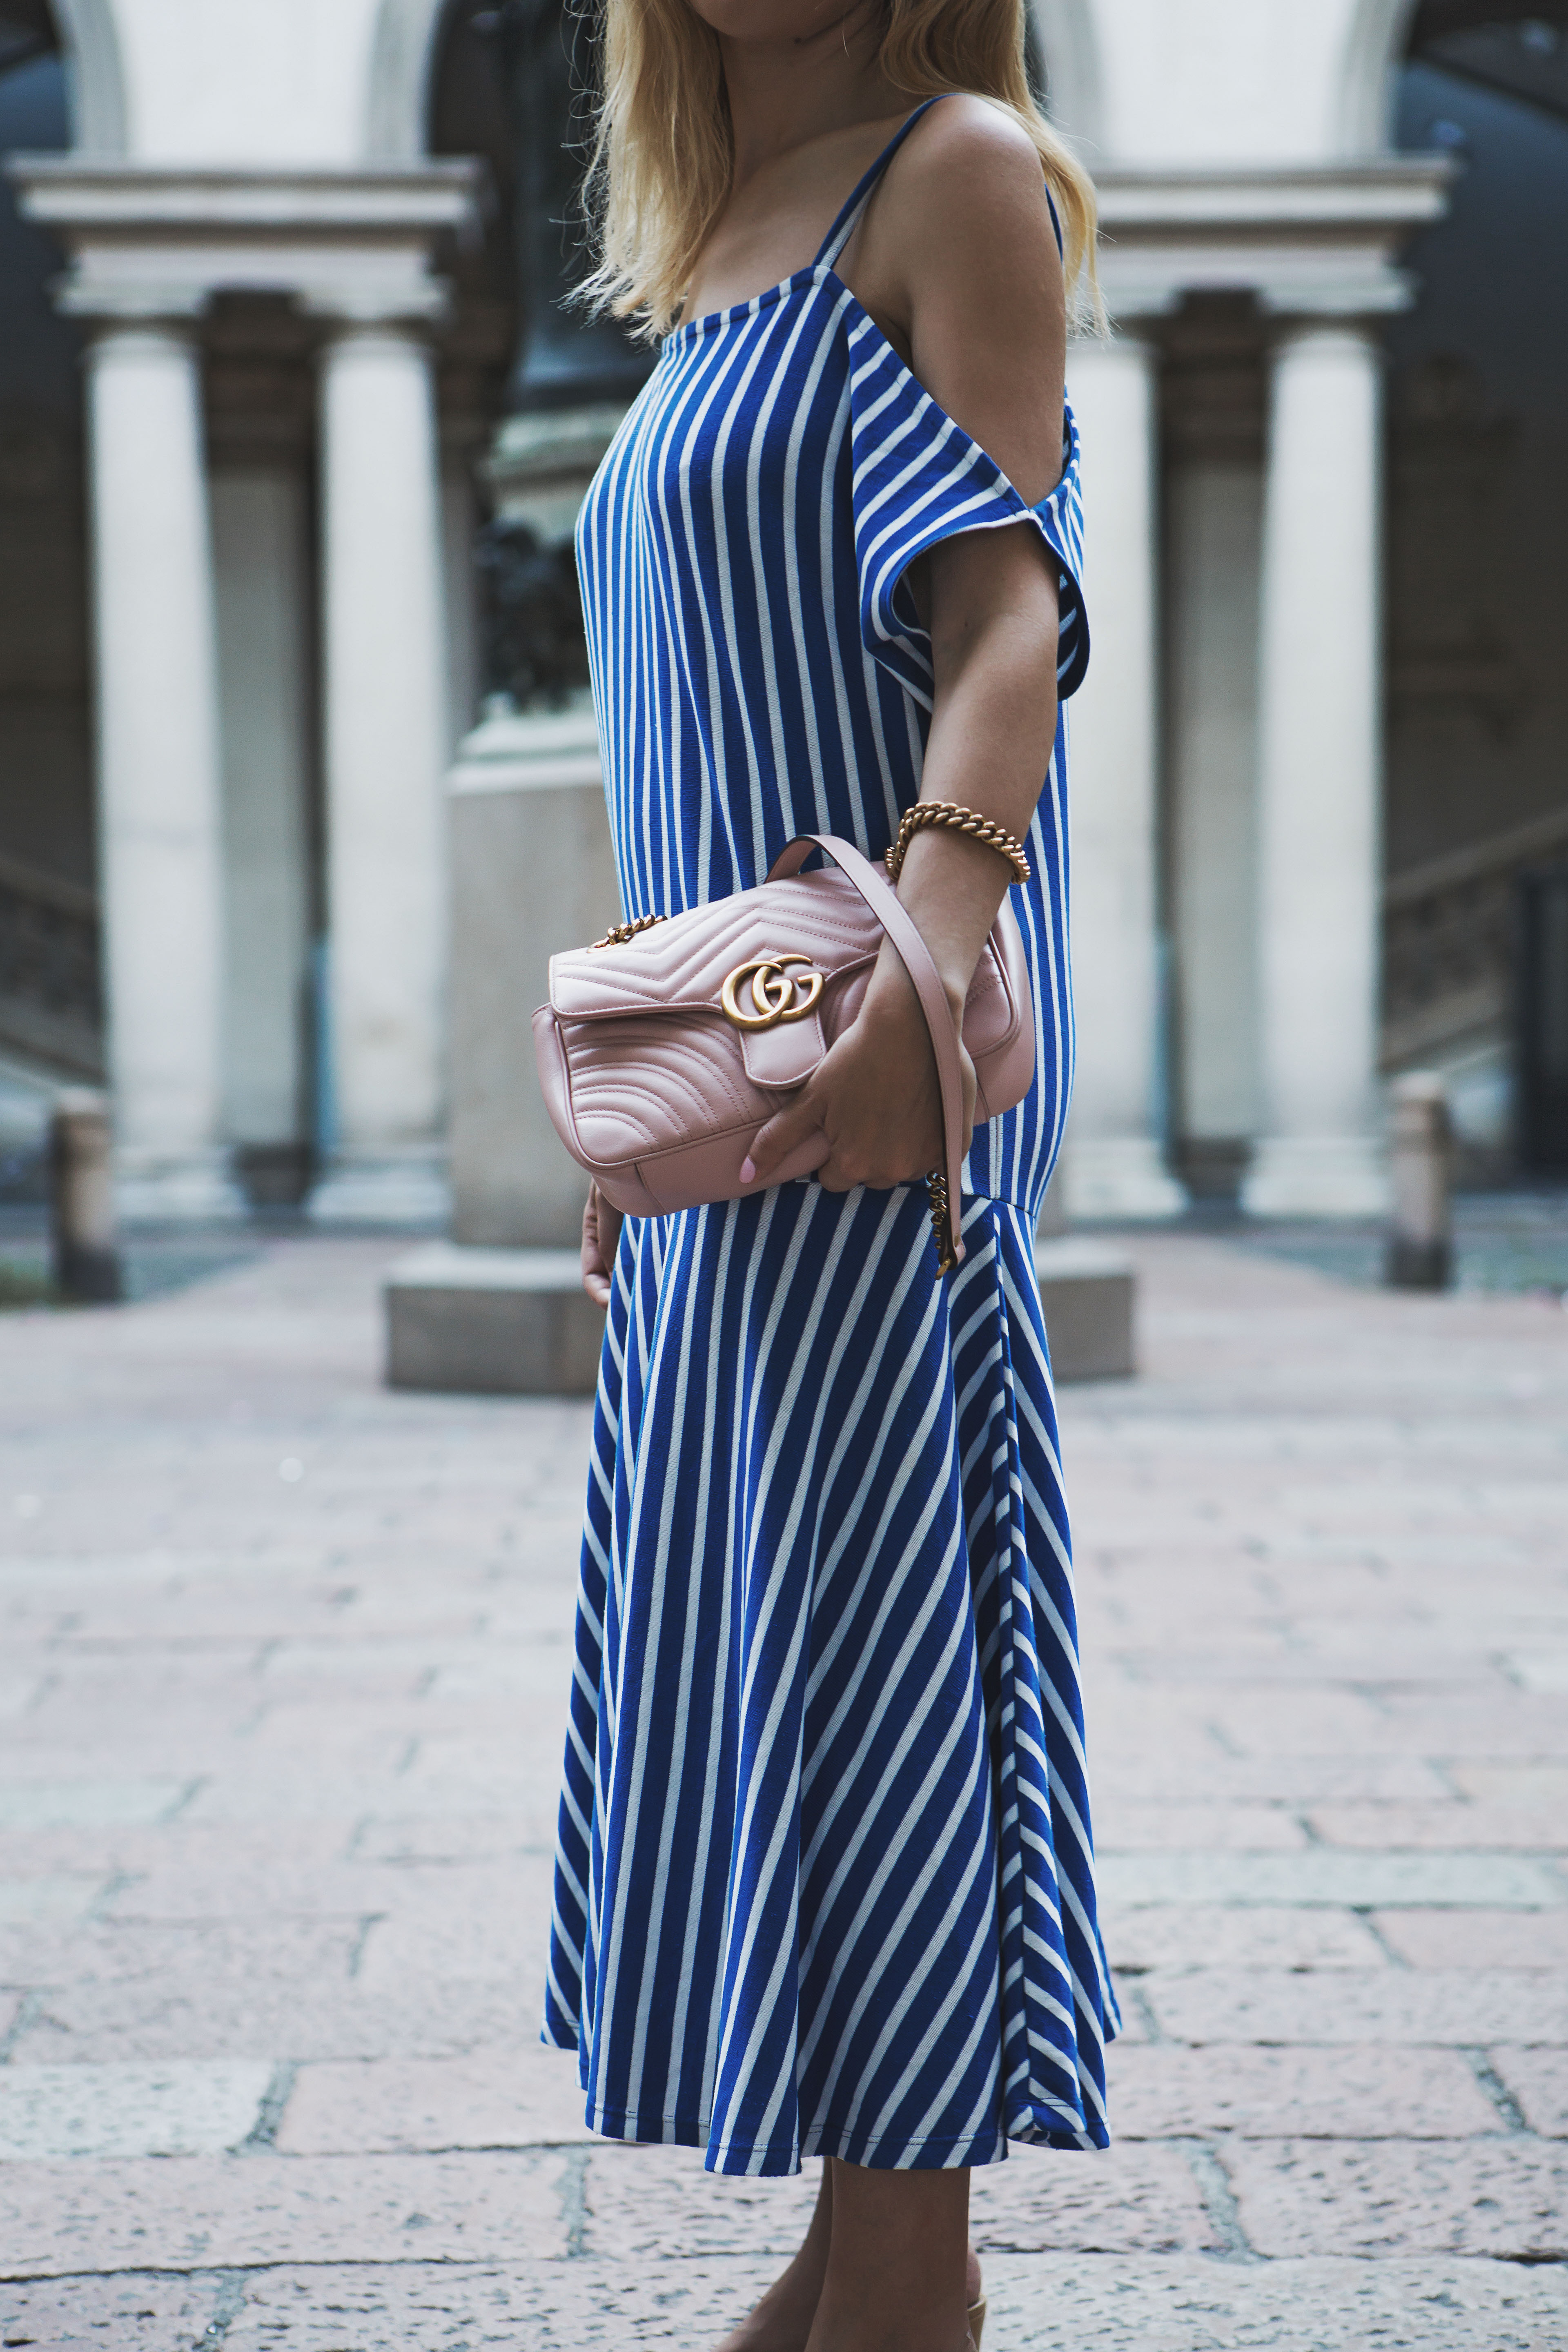 Blue-Dress-Milan_-11 Blue Striped Midi Dress in Milan